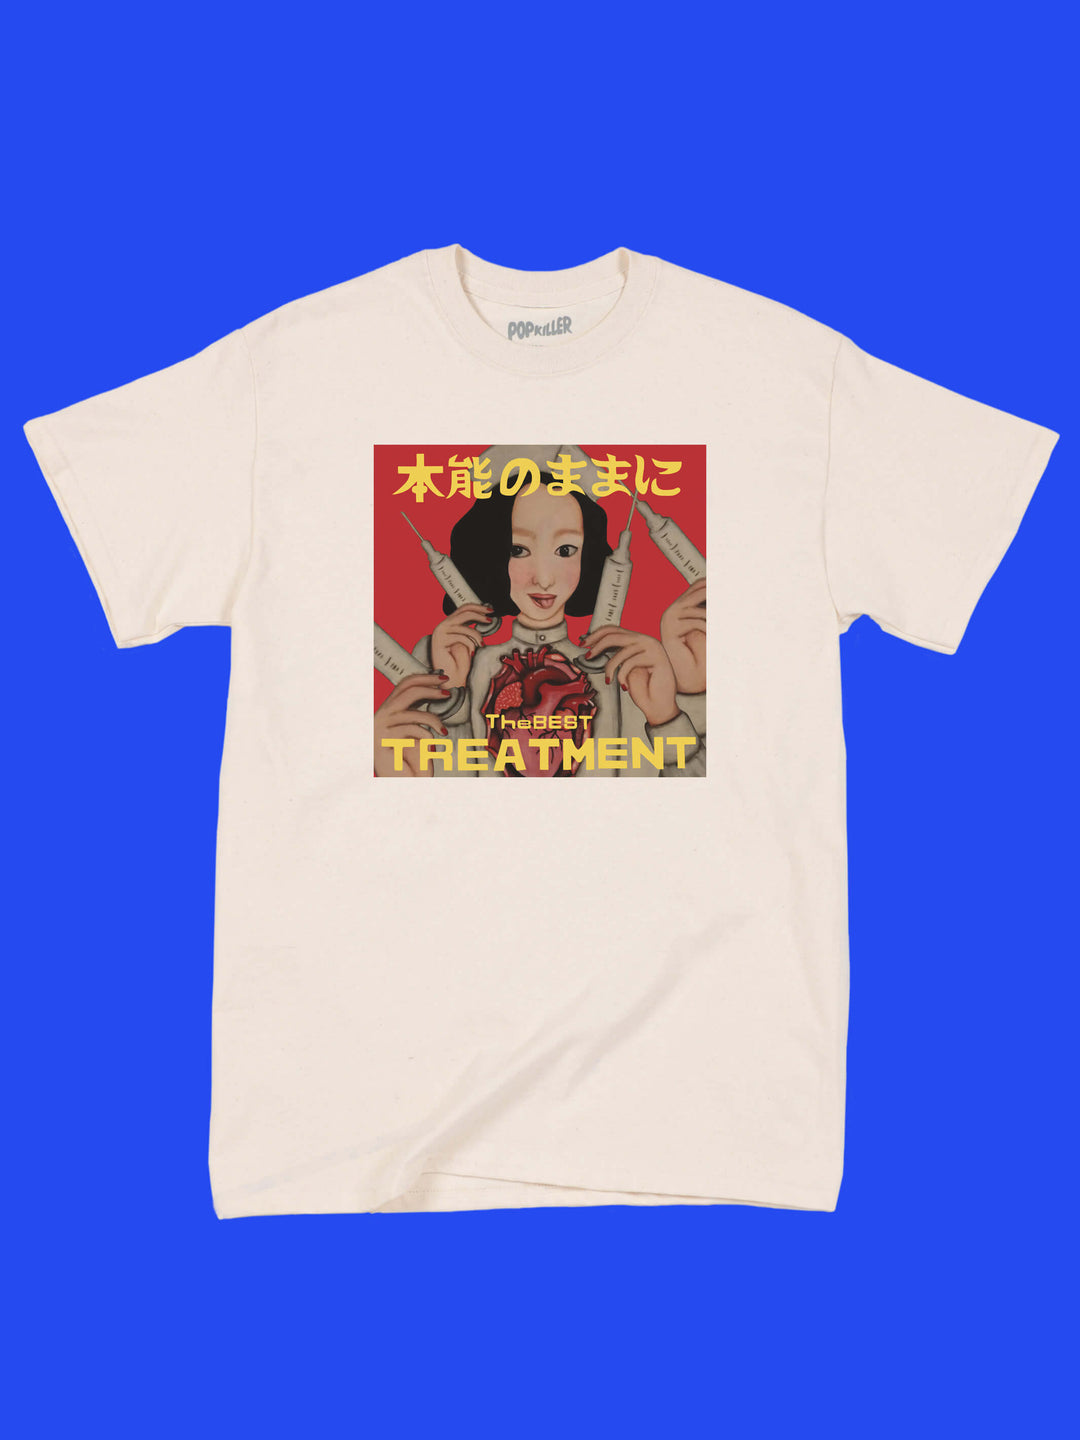 Retro Japanese nurse graphic t-shirt.